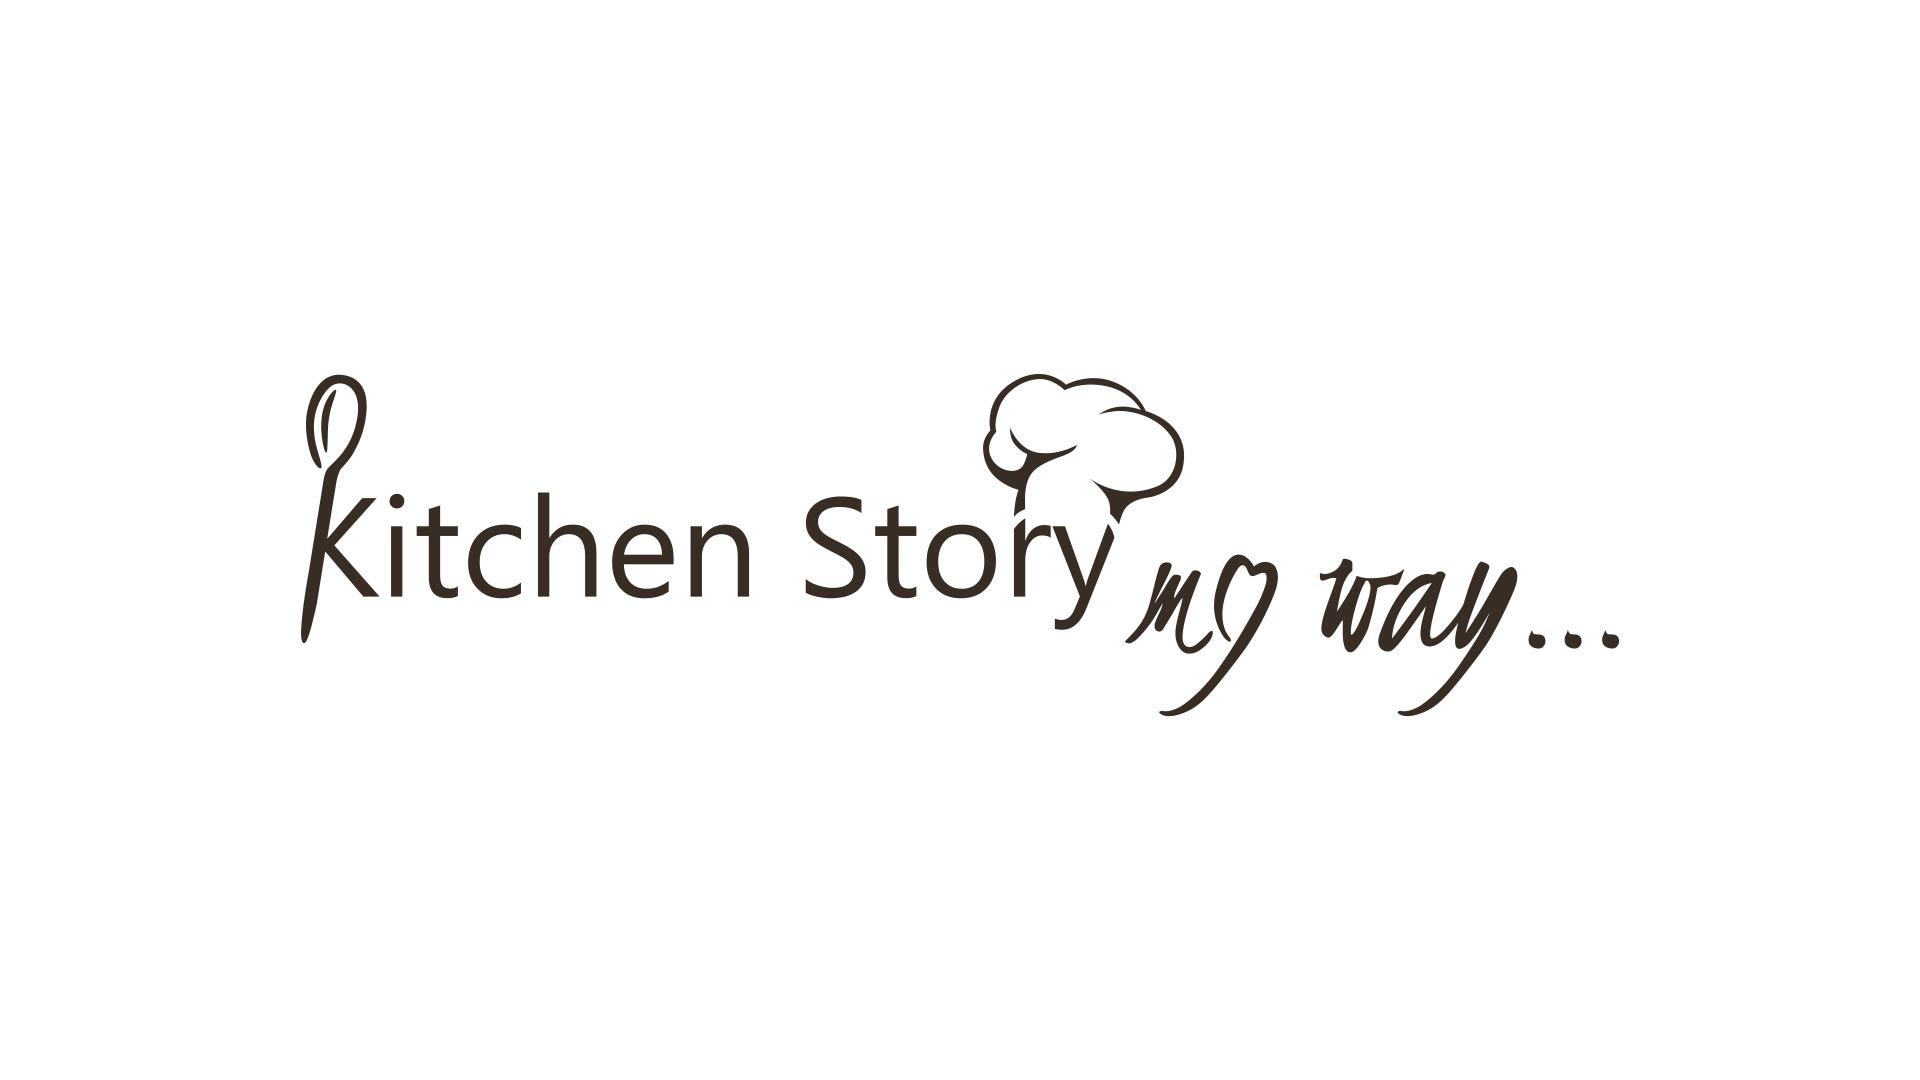 Tvorba loga - logo Kitchen story my way